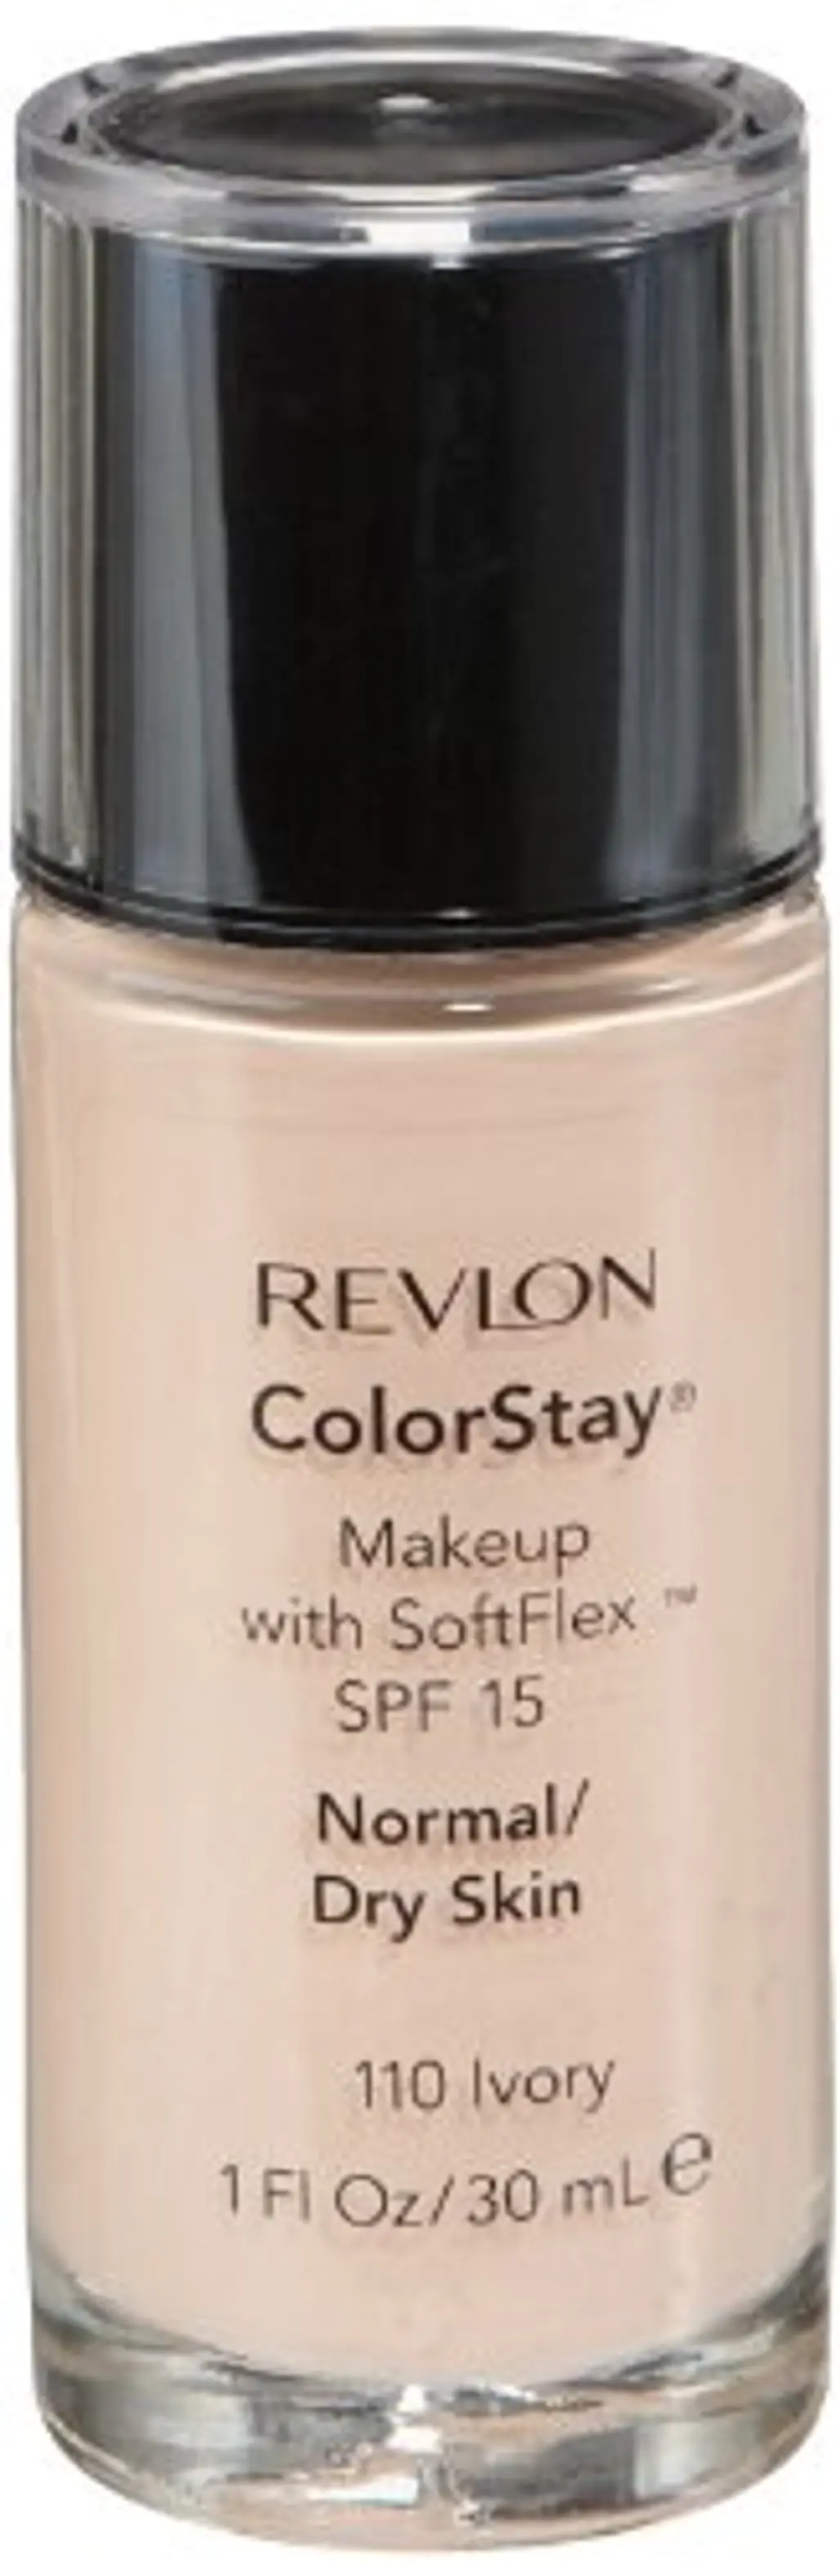 Revlon ColorStay Makeup with SoftFlex